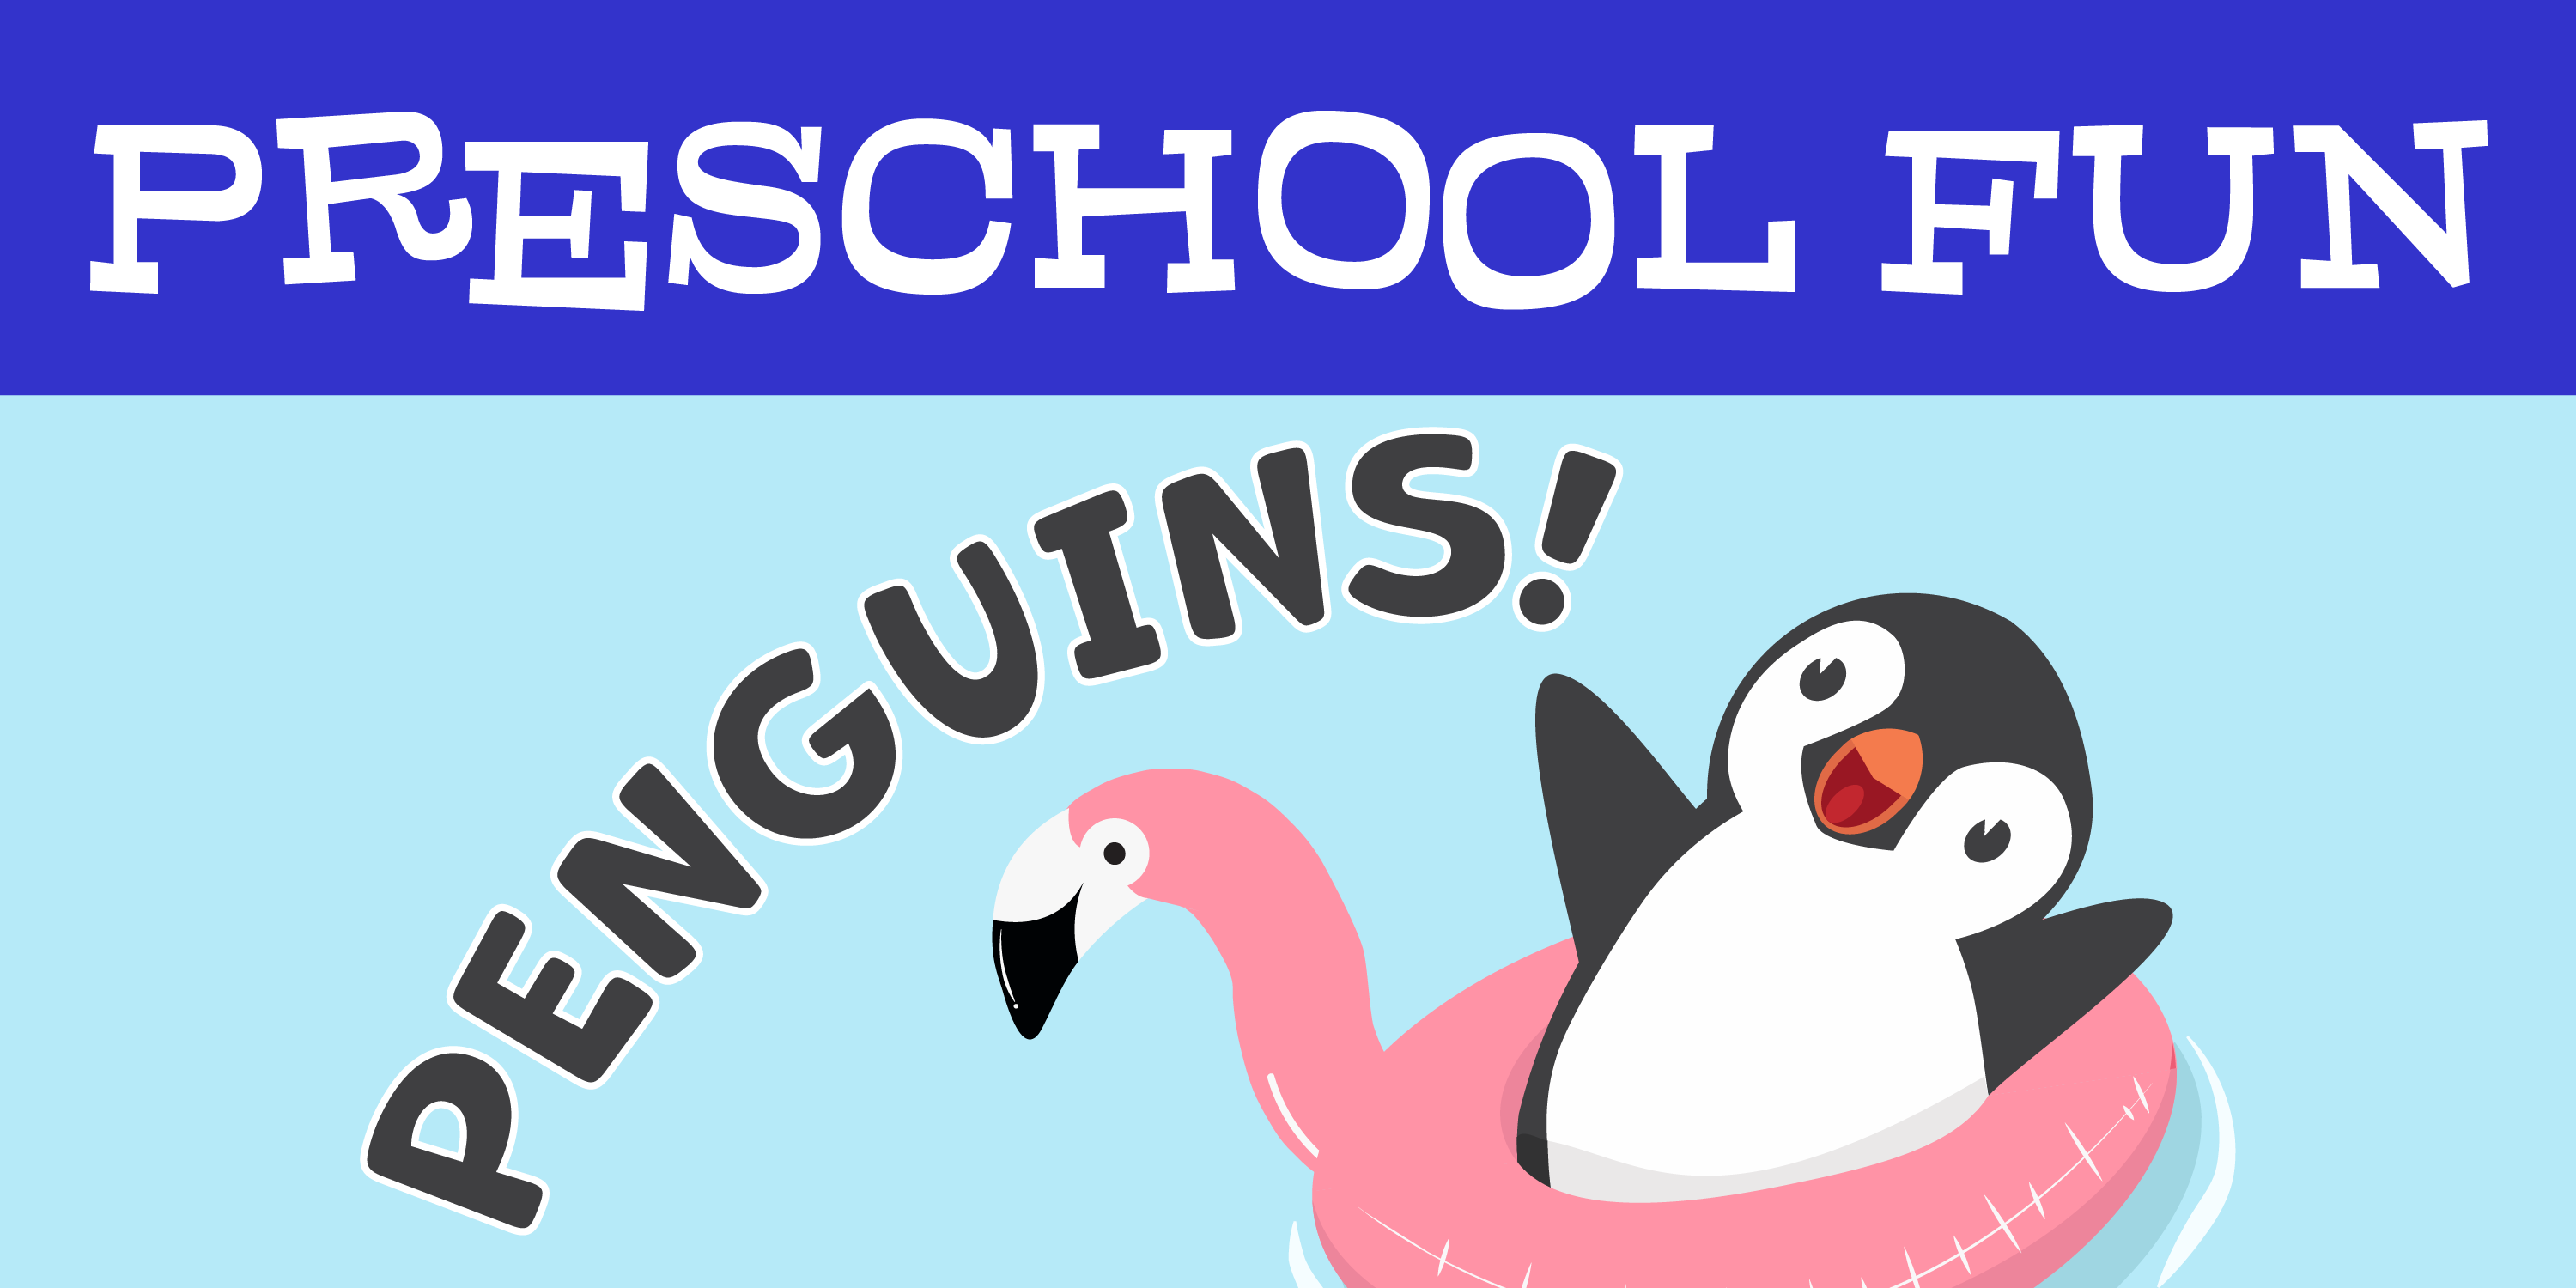 Preschool Fun: Penguins!